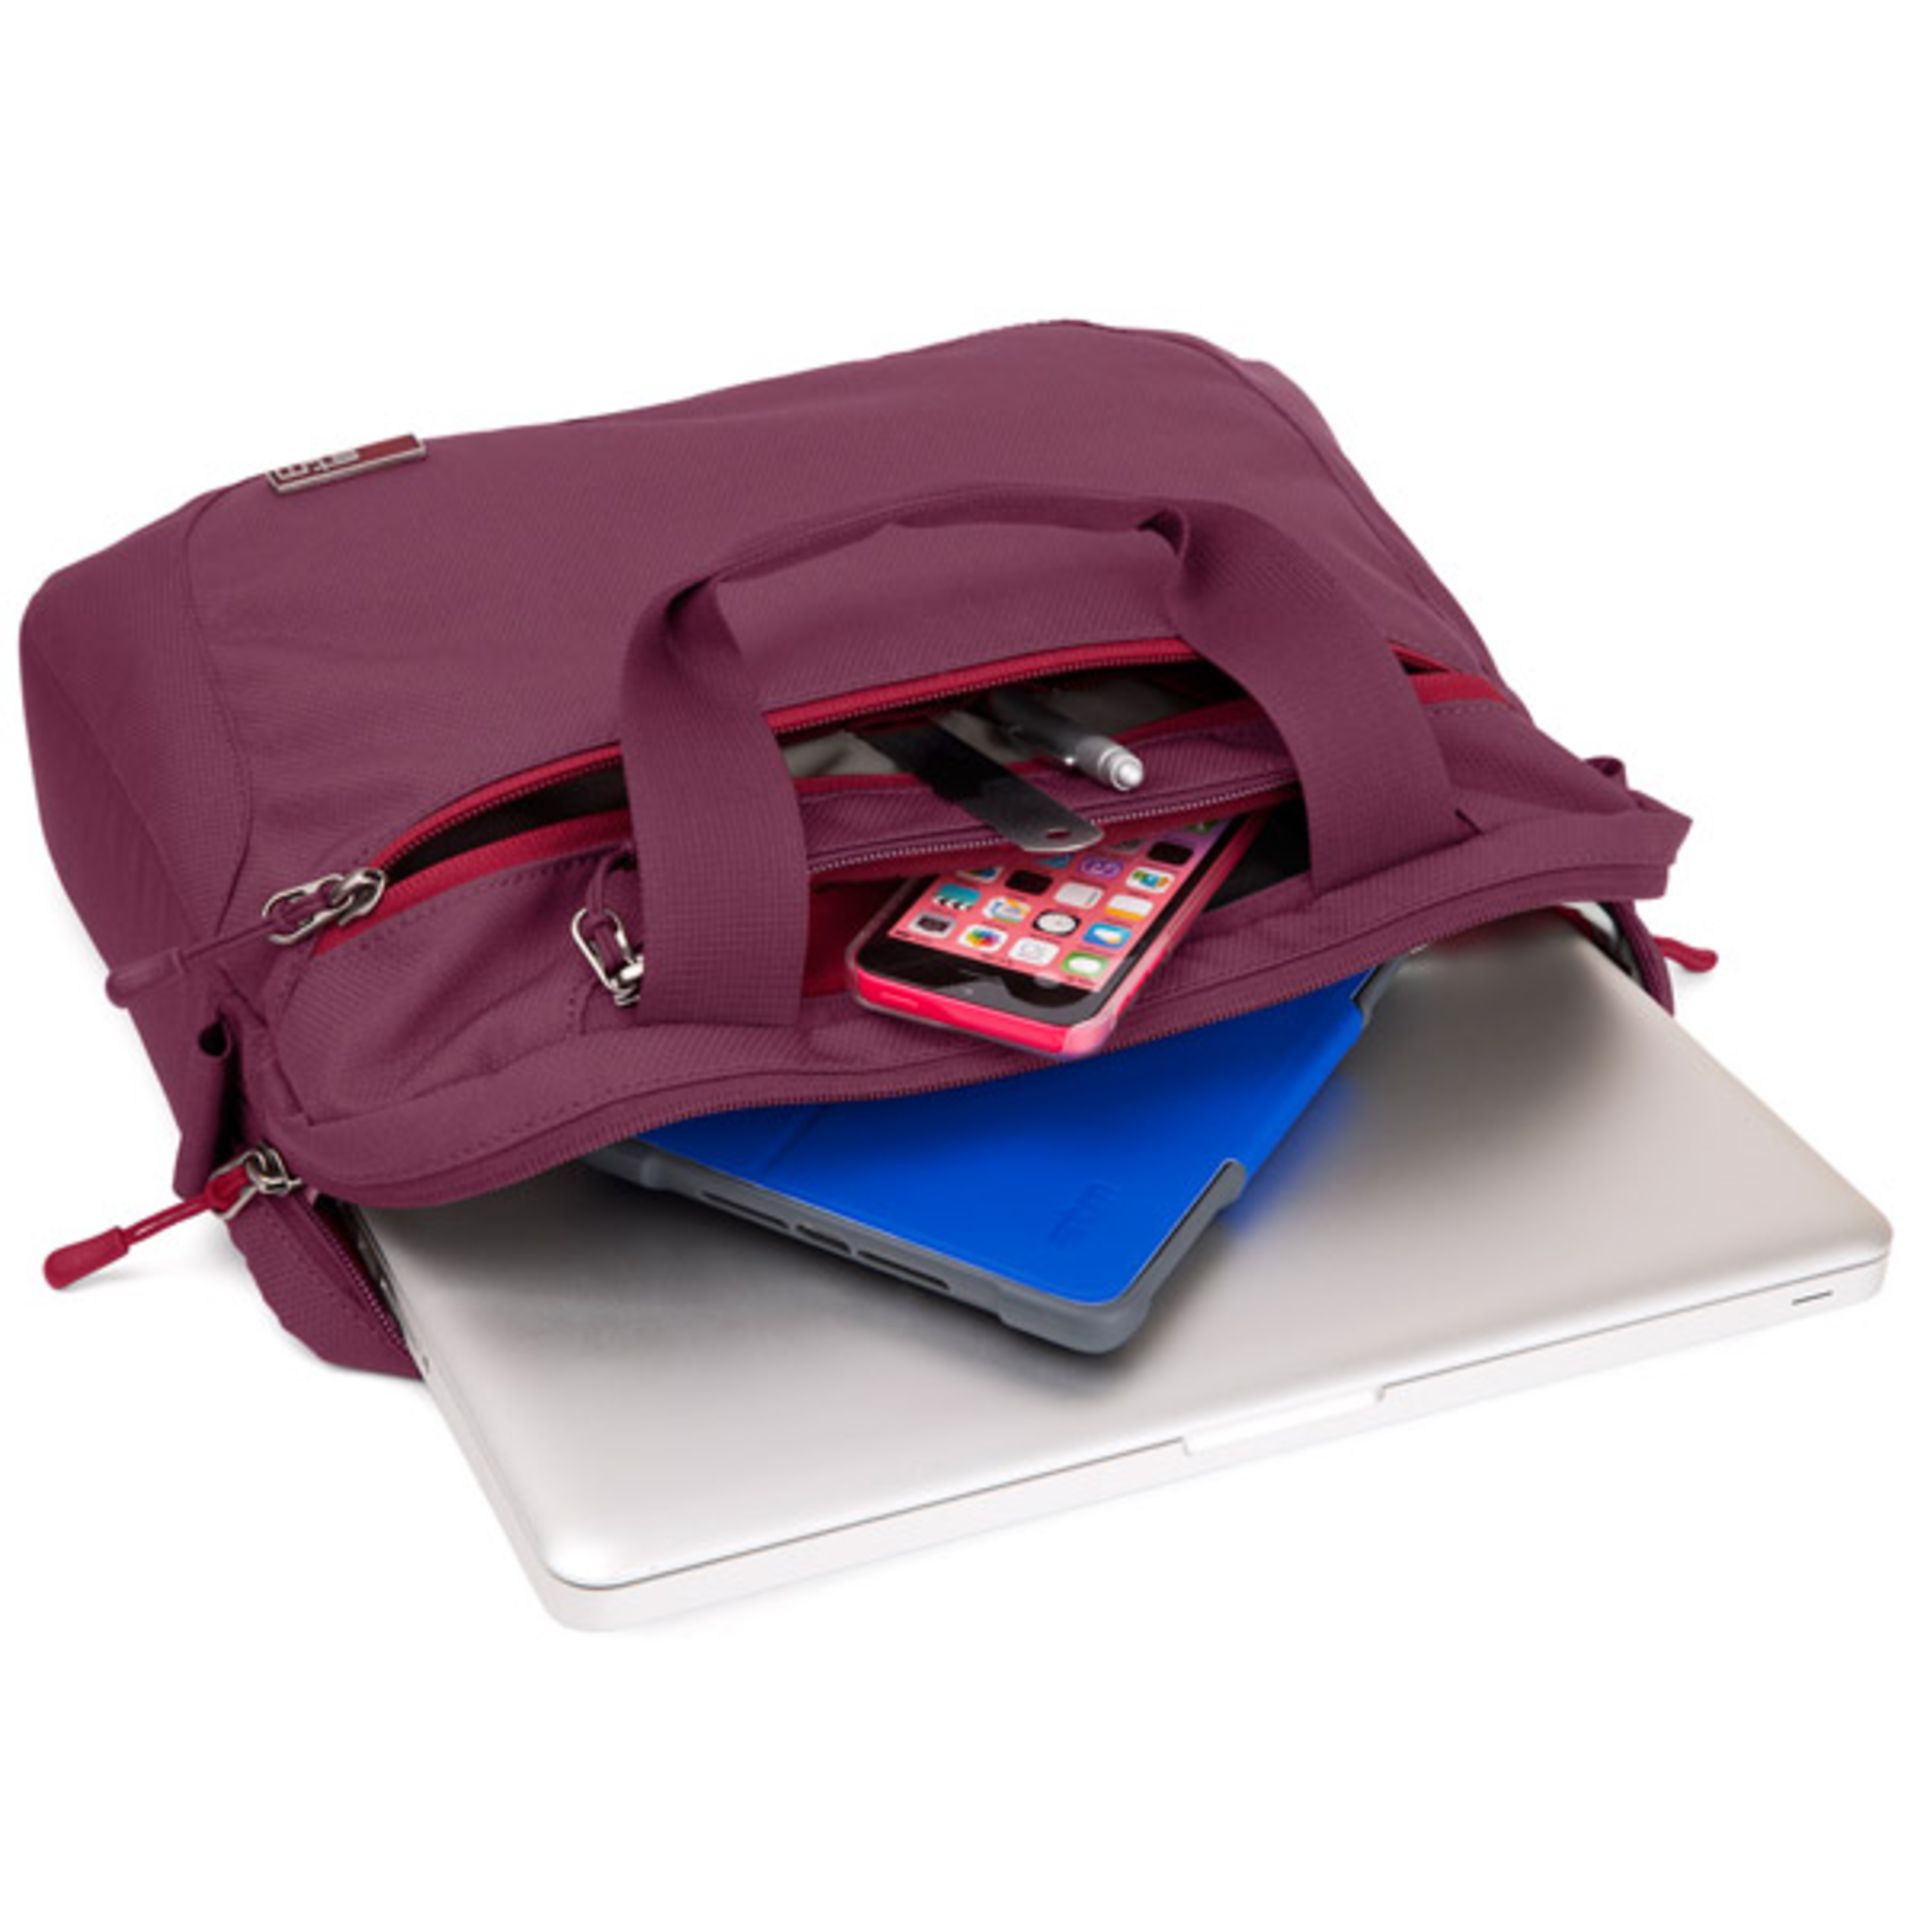 V *TRADE QTY* Brand New STM Swift Medium Shoudler Bag For Up To 15" Laptop/Tablet Sutiable For